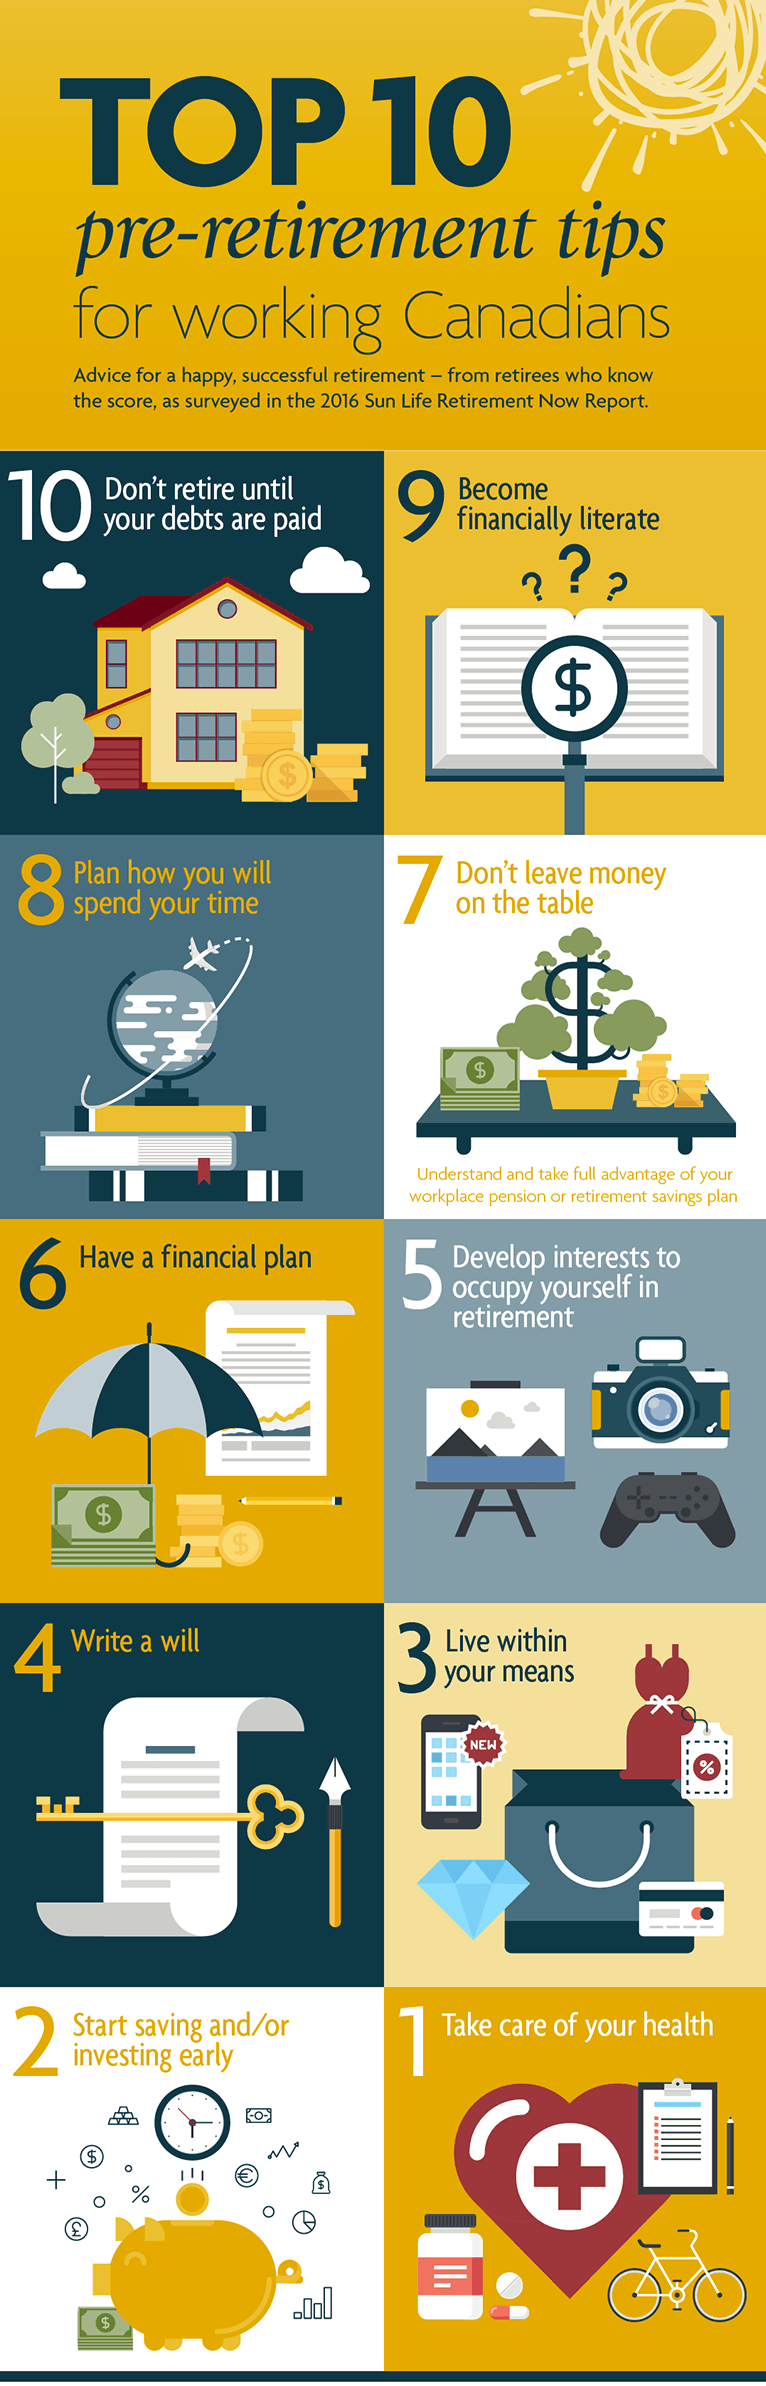 Retirement top 10 pre-retirement tips